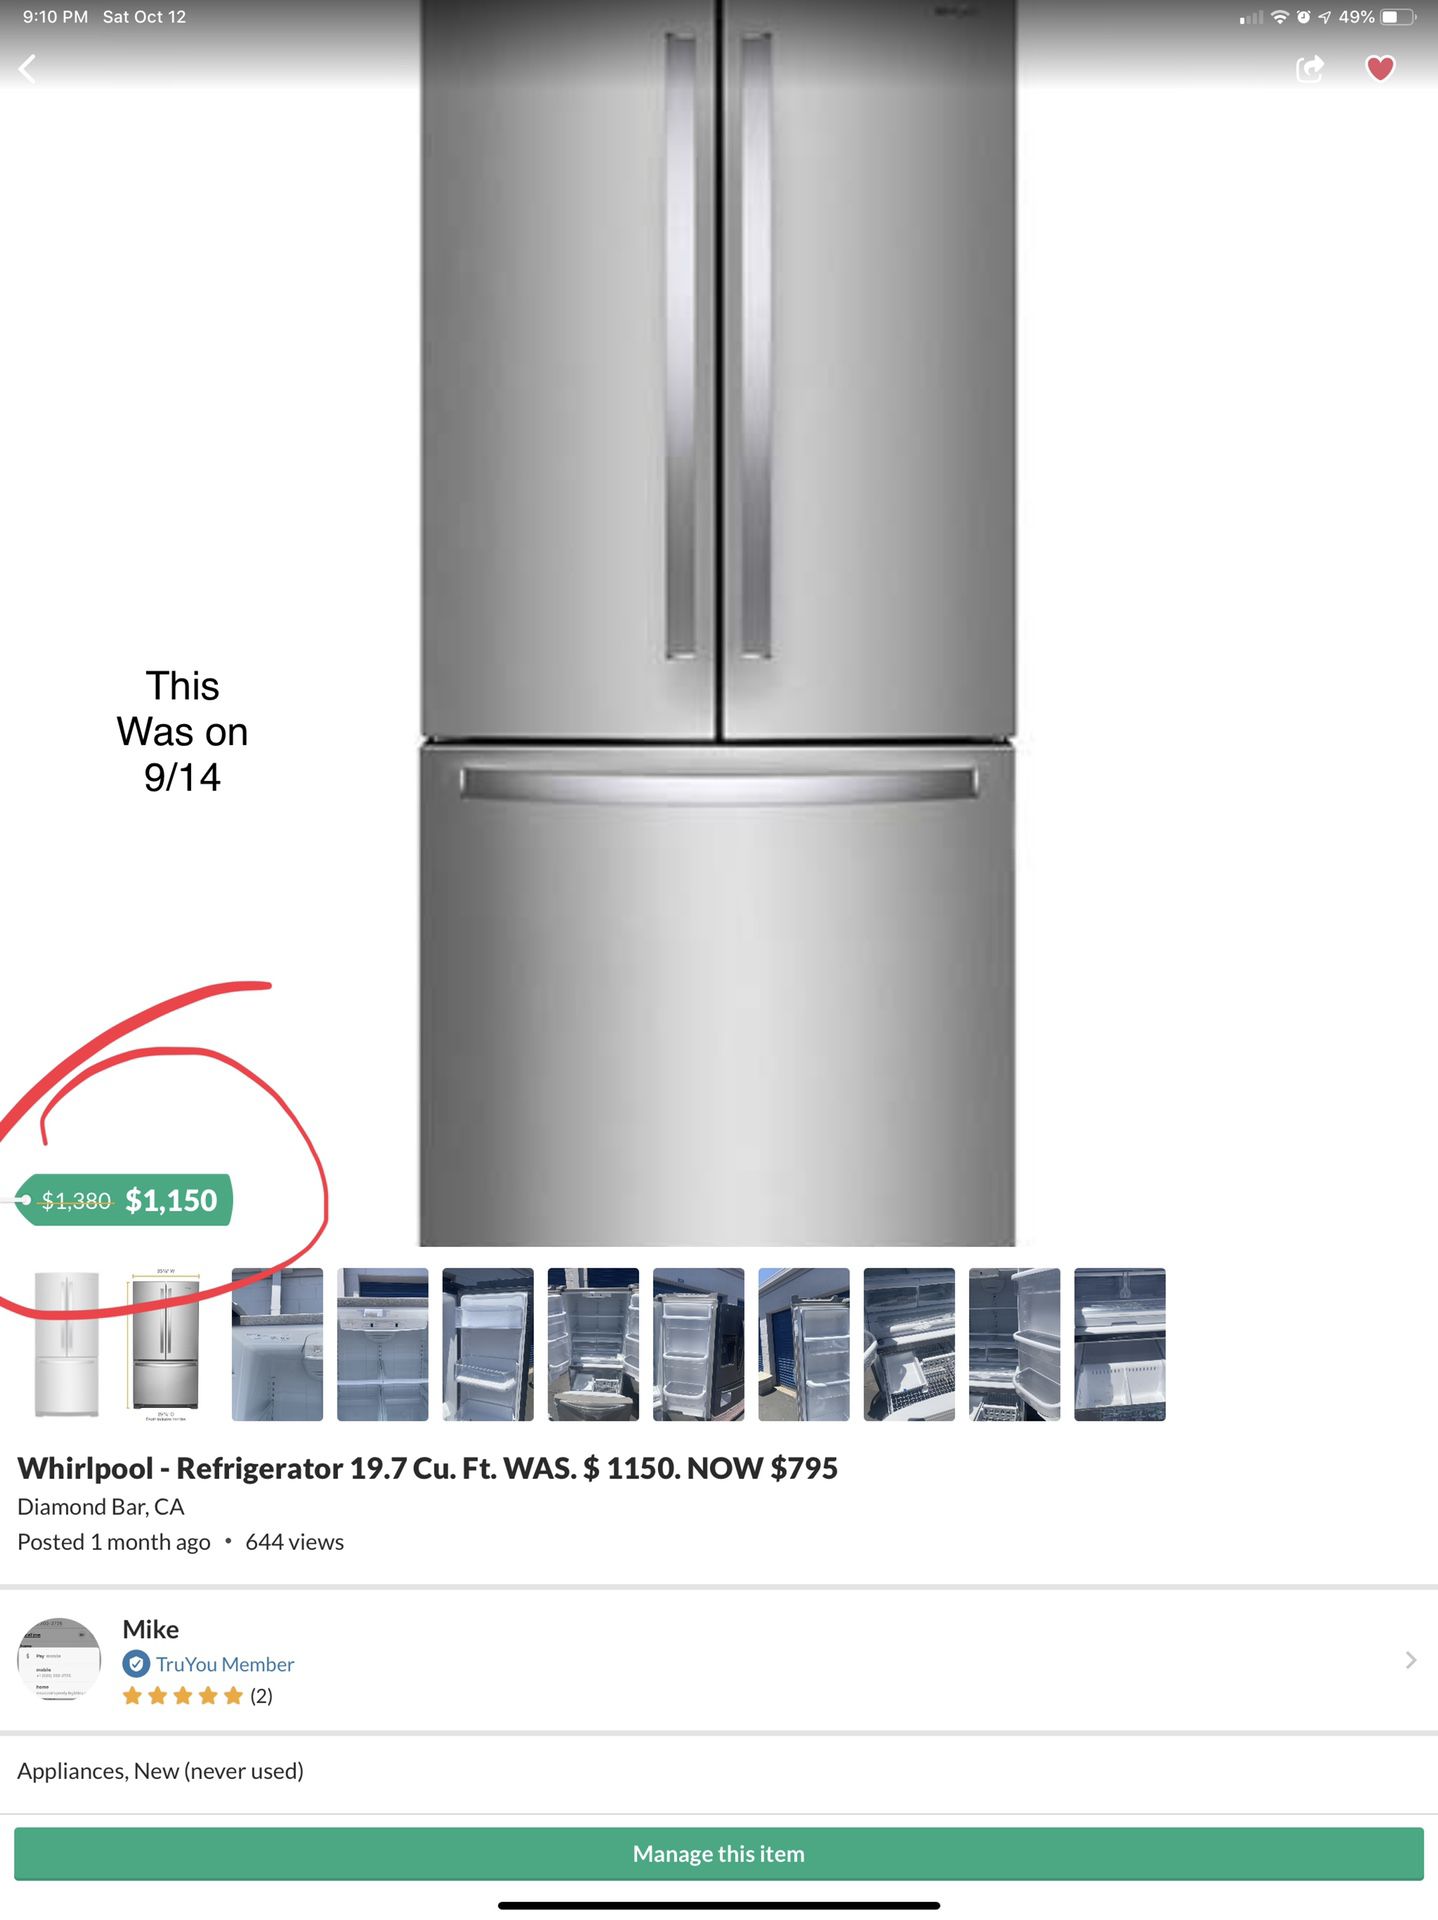 Whirlpool - Refrigerator 19.7 Cu. Ft. WAS. $ 1150. NOW $795